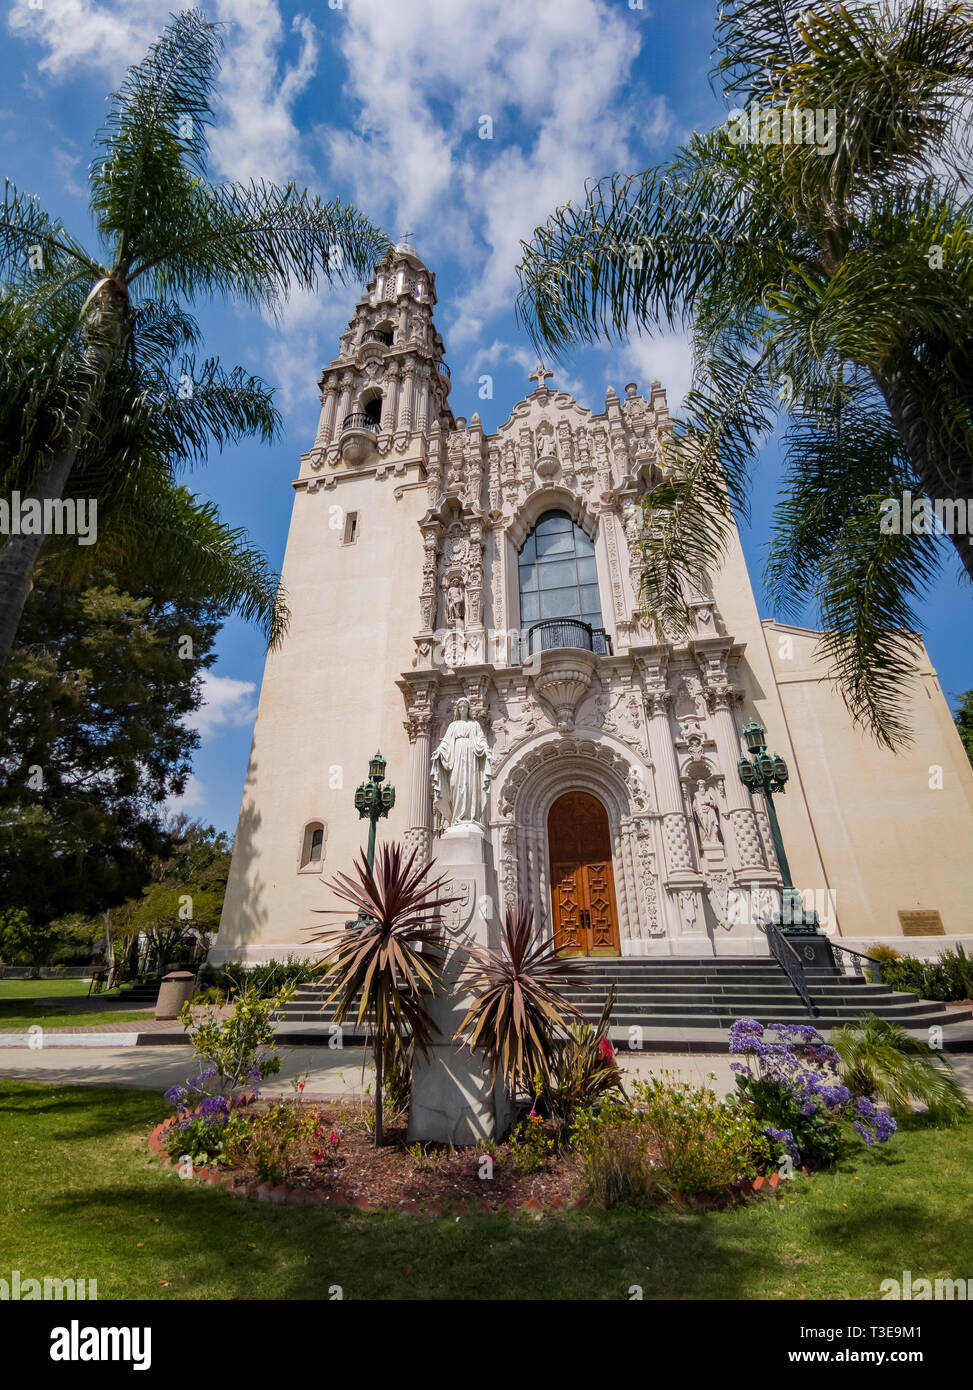 Los Angeles, APR 2: Exterior view of St. Vincent de Paul Roman Catholic Church on APR 2, 2019 at Los Angeles, California Stock Photo